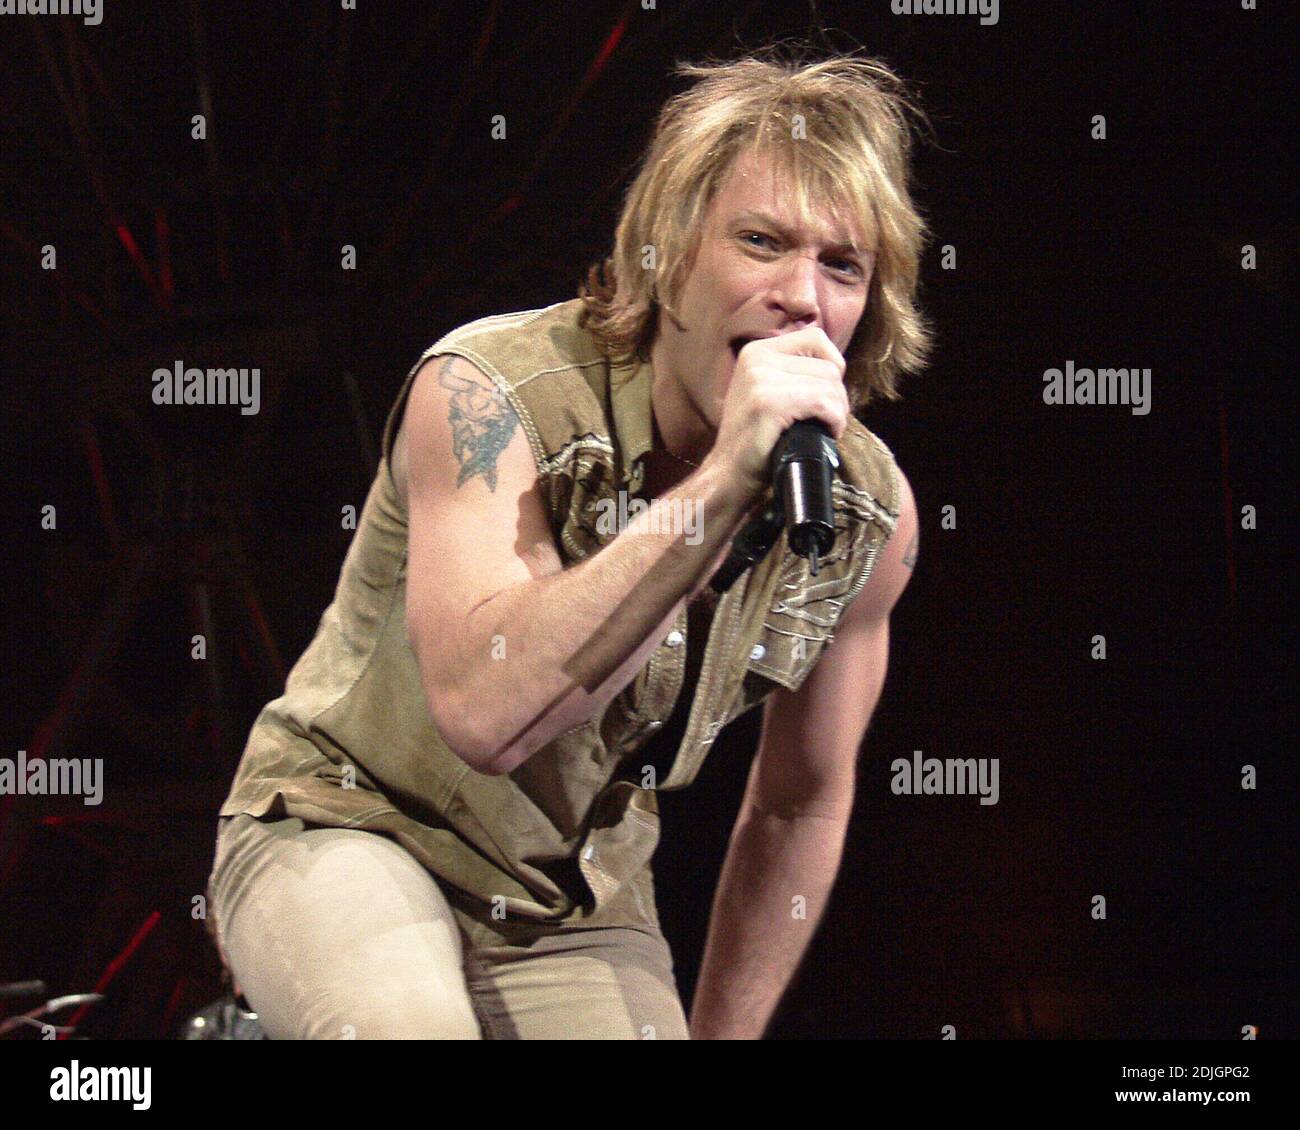 February 13: Jon Bon Jovi of Bon Jovi performs at Philips Arena in Atlanta, Georgia on February 13, 2003. CREDIT: Chris McKay / MediaPunch Stock Photo